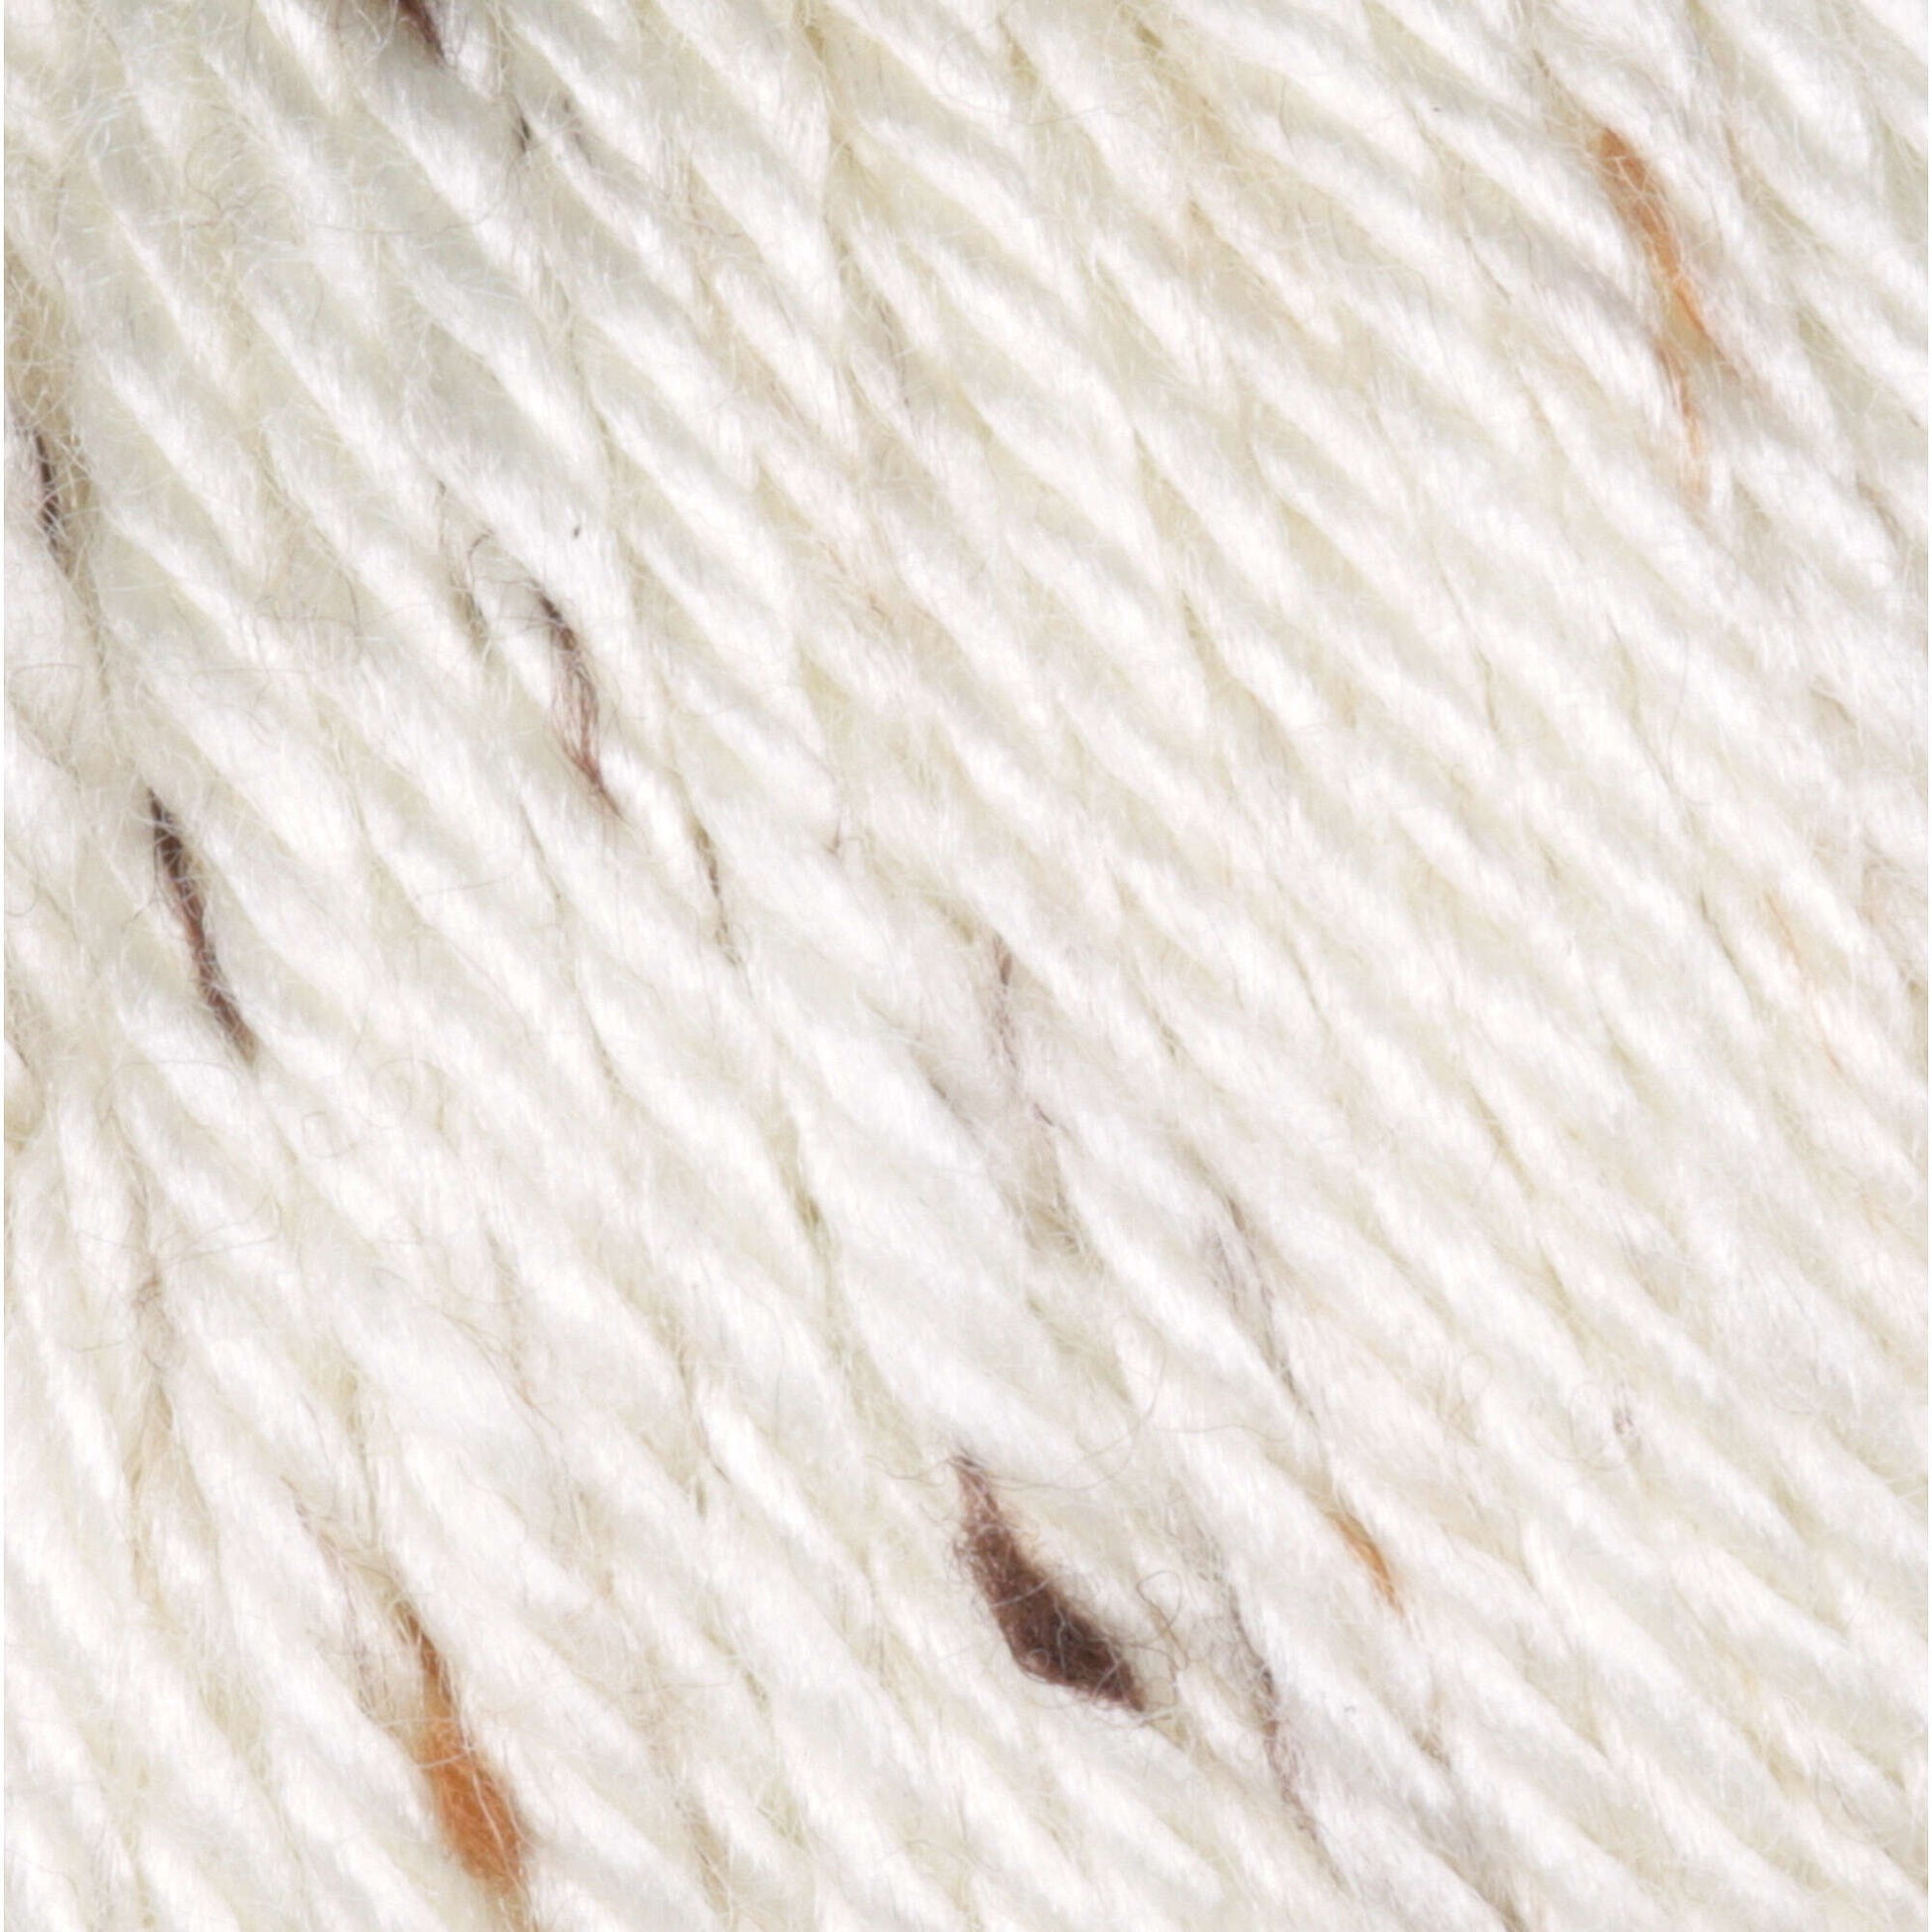 Caron Simply Soft Tweeds Yarn